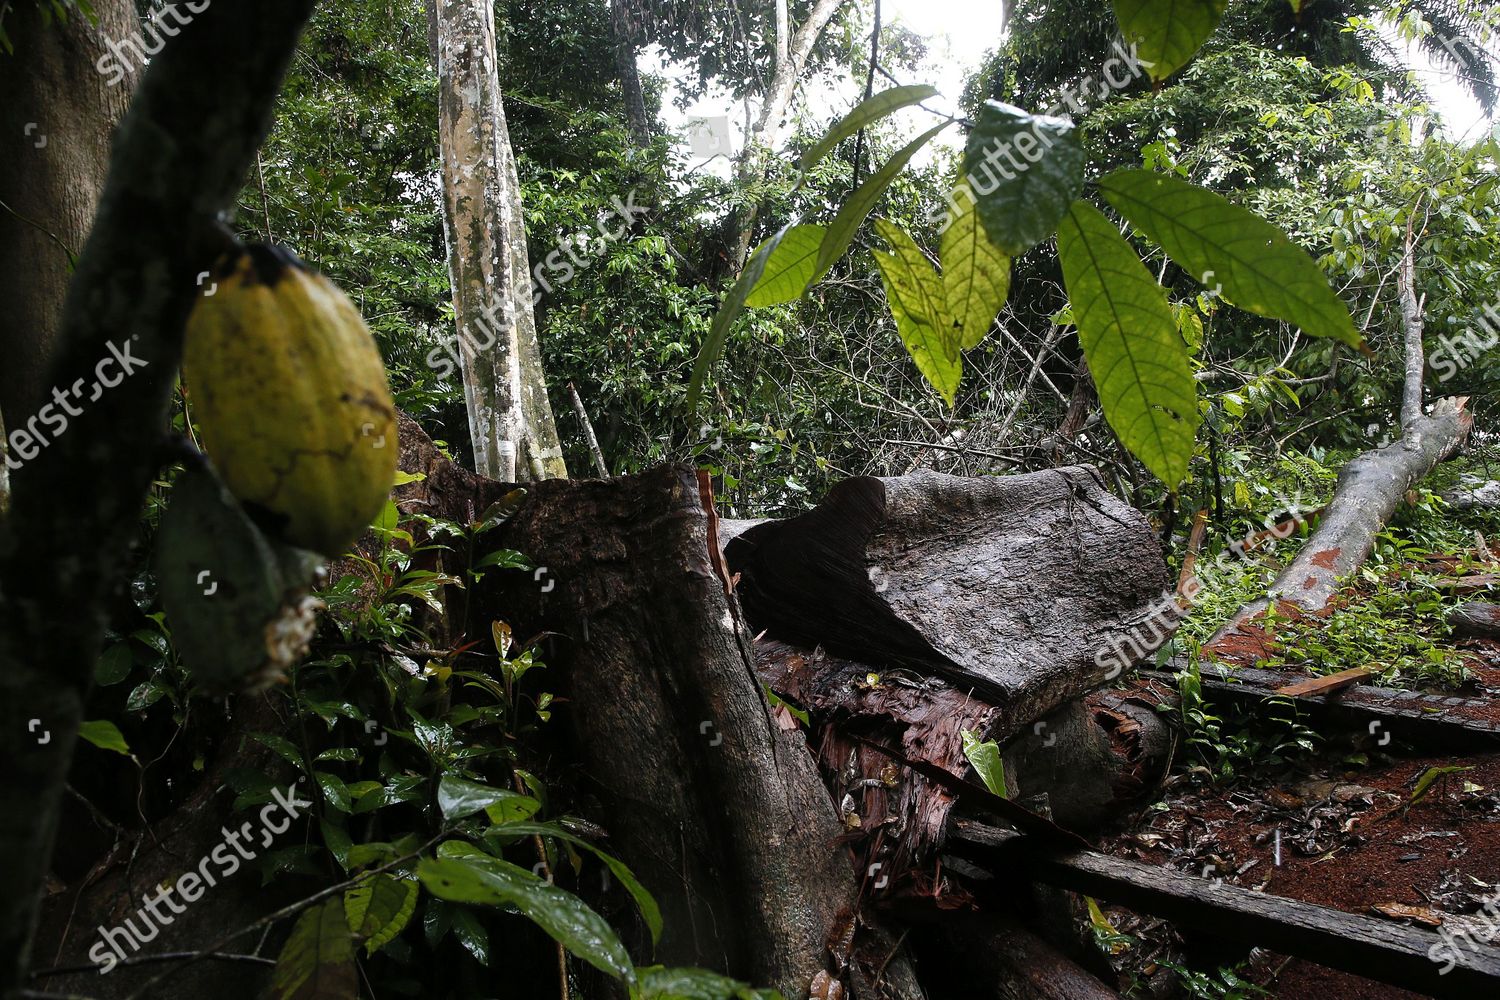 View Felled Tree Cocoa Field Alepe Region Photos Editoriales Libres De Droits Image Libre De Droits Shutterstock